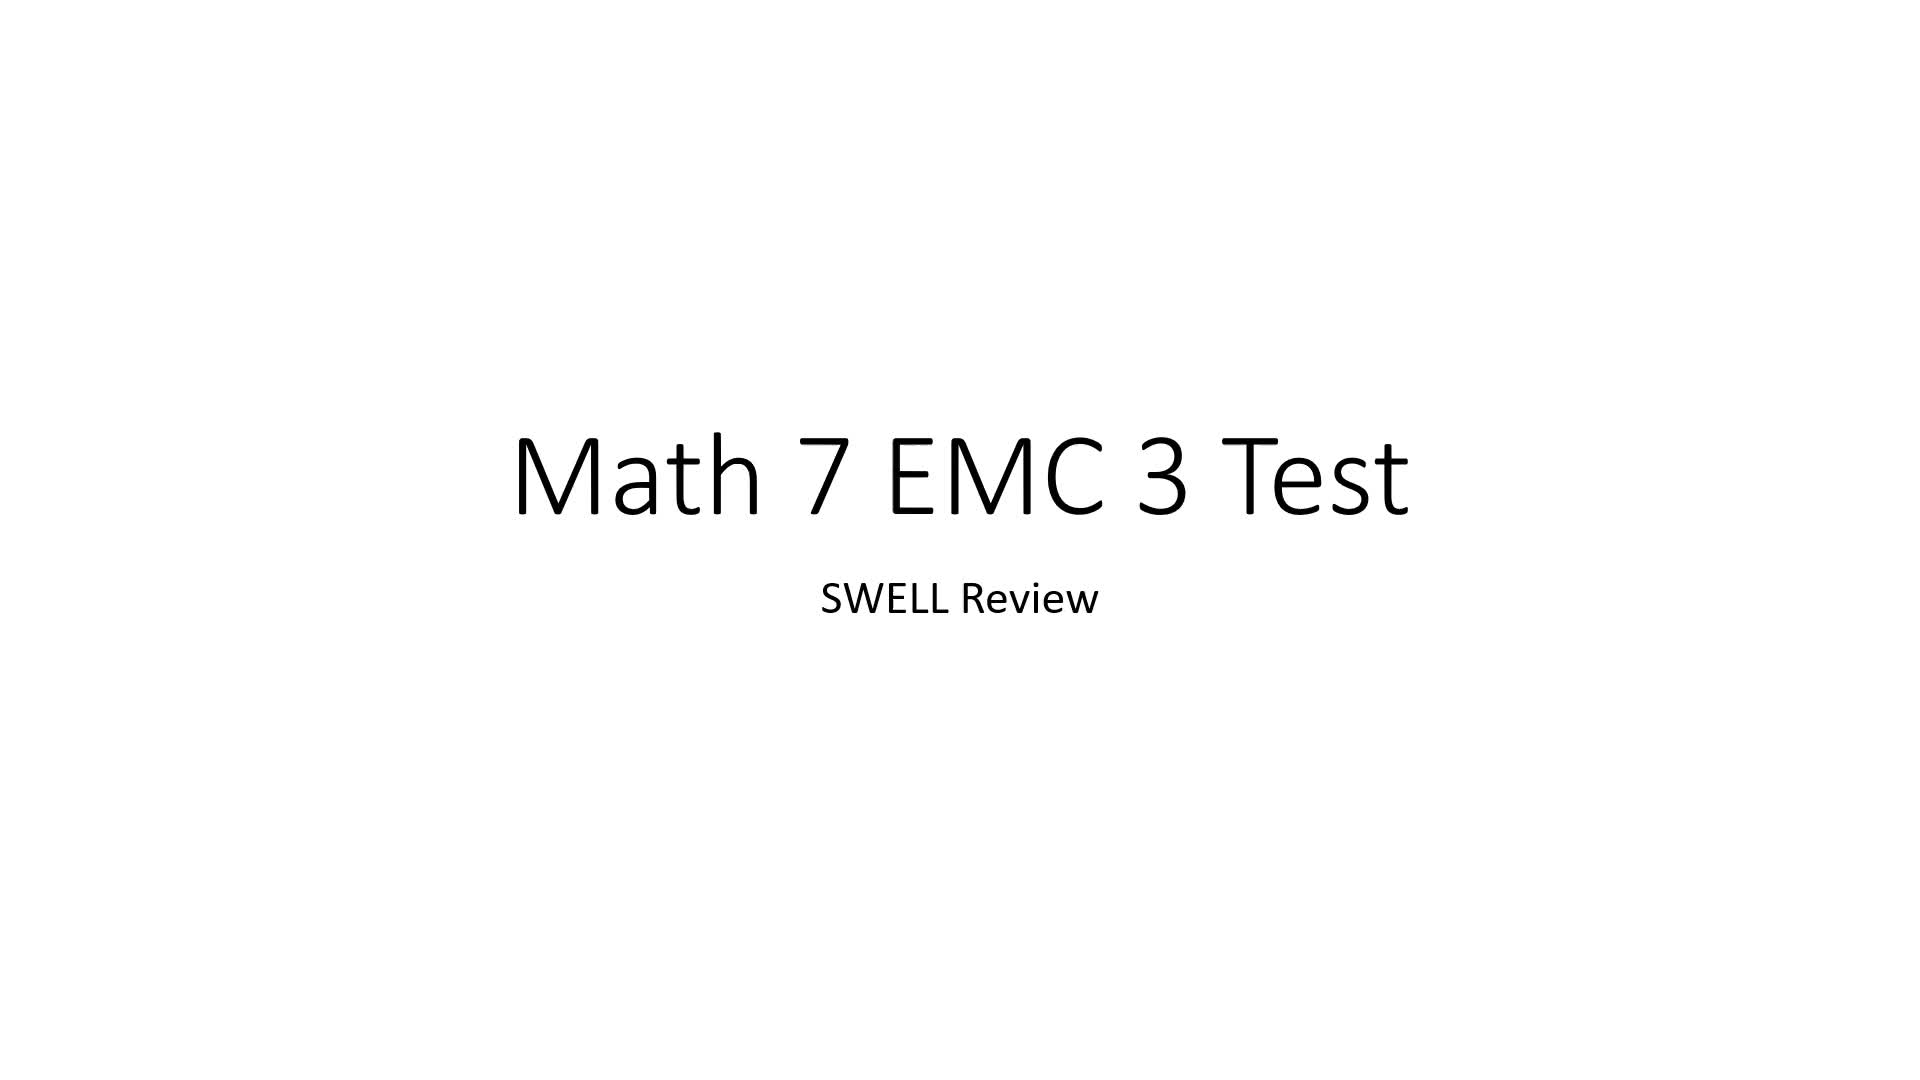 Math 7 EMC 3 SWELL Review